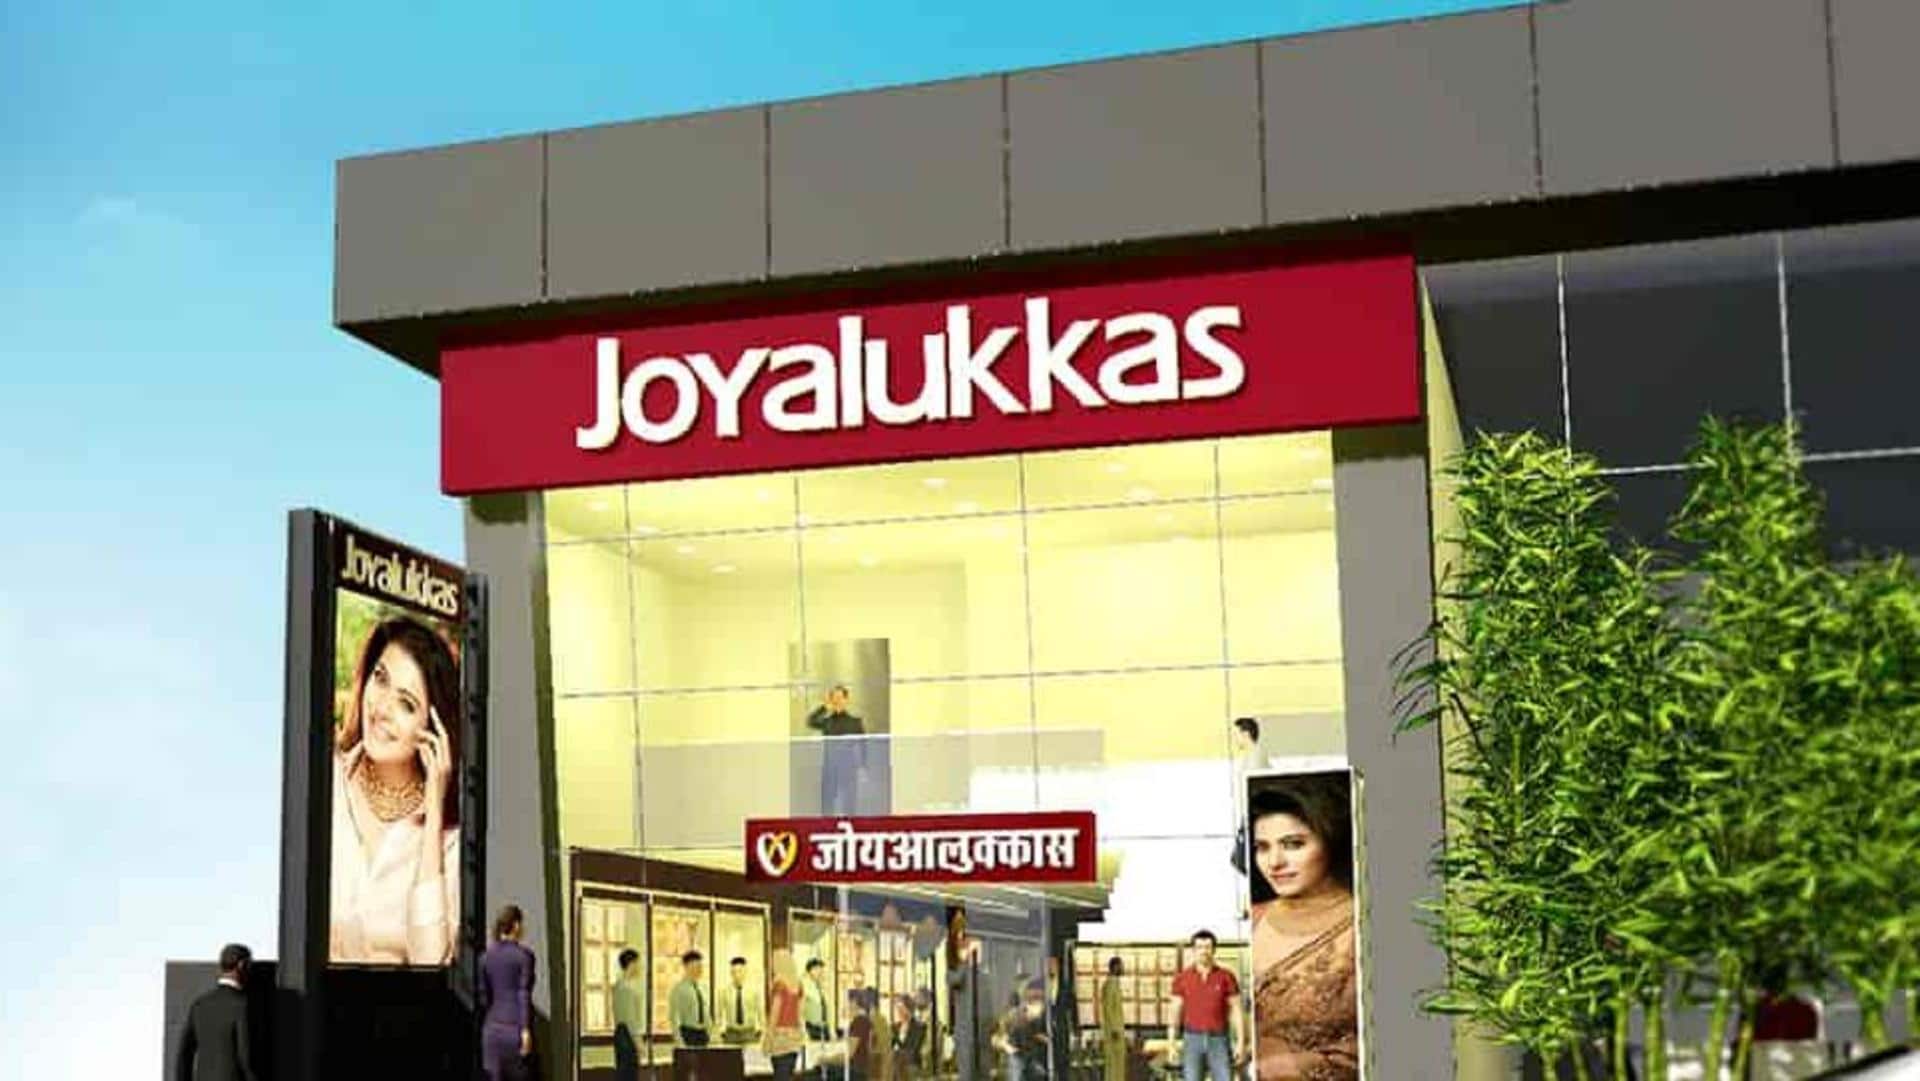 Joyalukkas under ED scanner; assets worth Rs. 305 crore seized